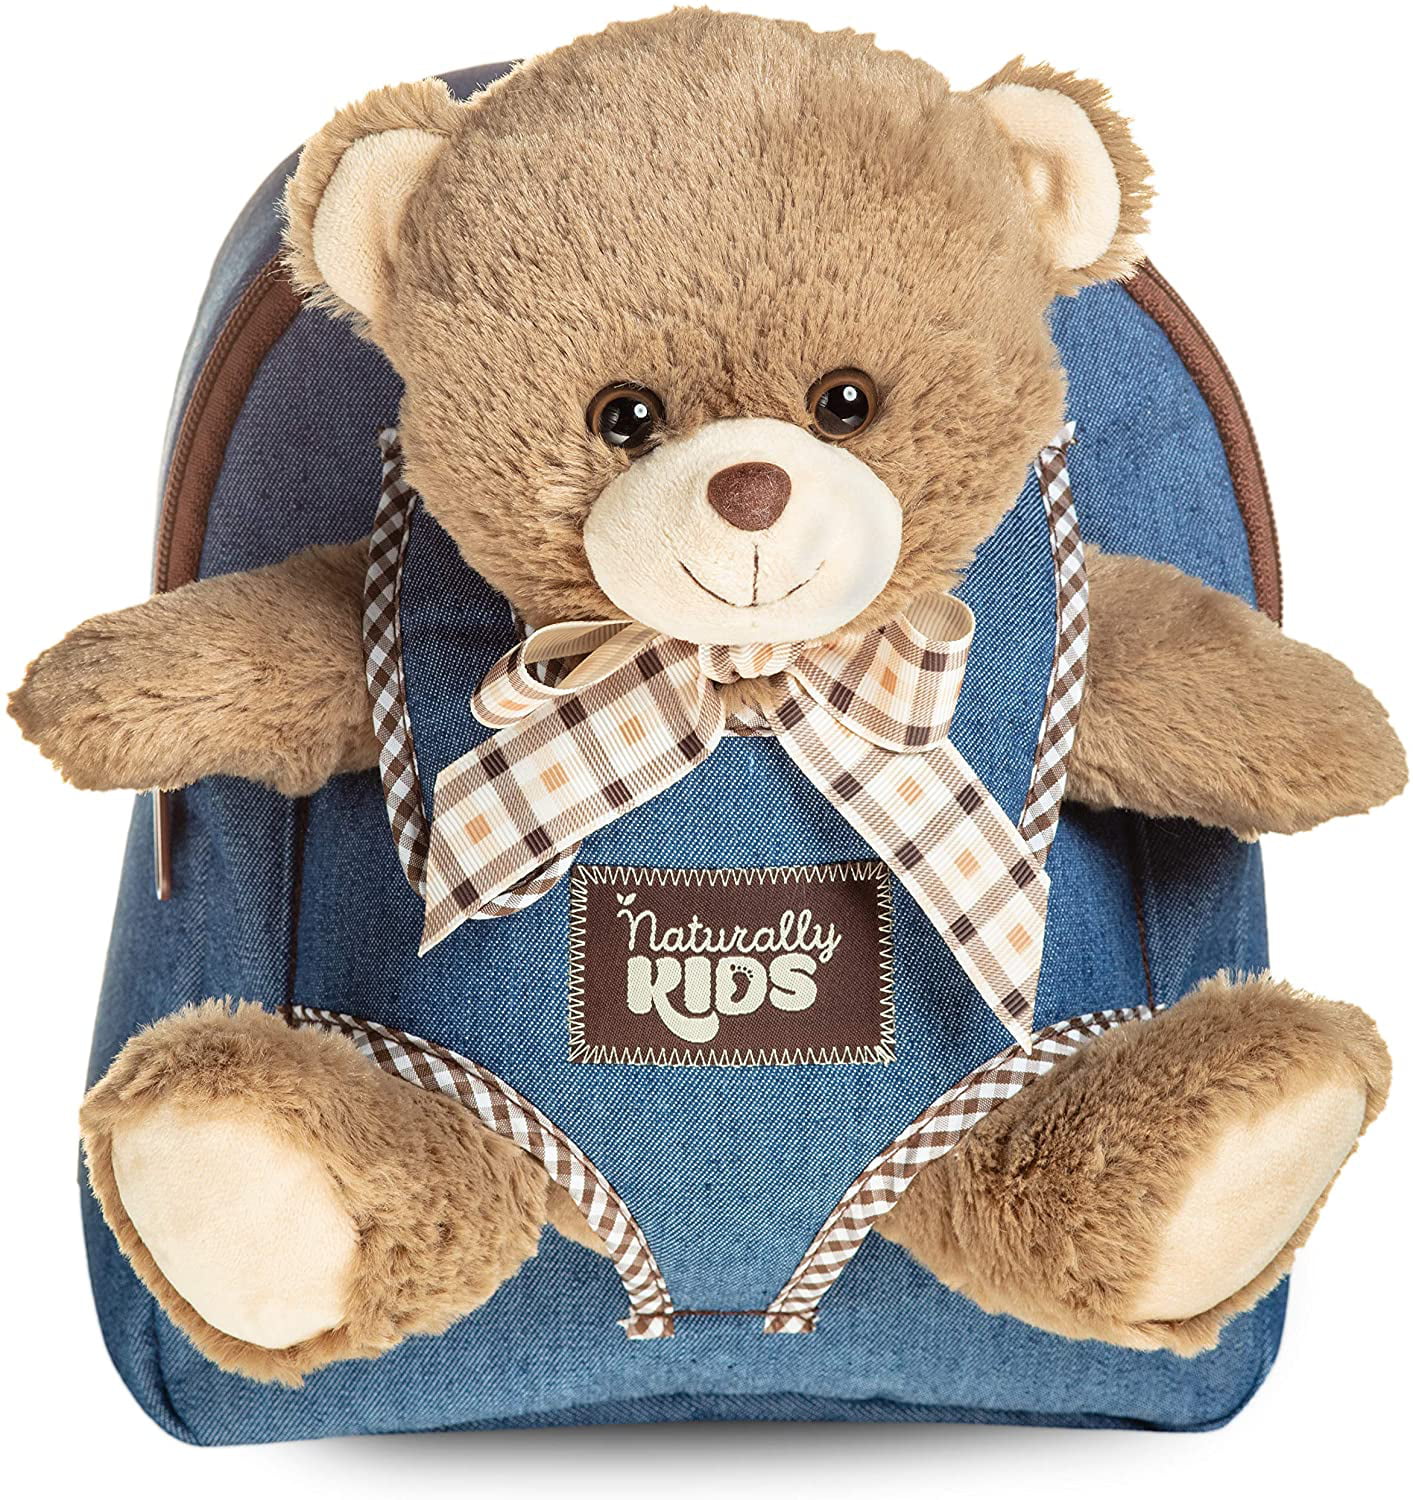 6" Brown Plush Teddy Bear Stuffed Animal Toy Gift New 